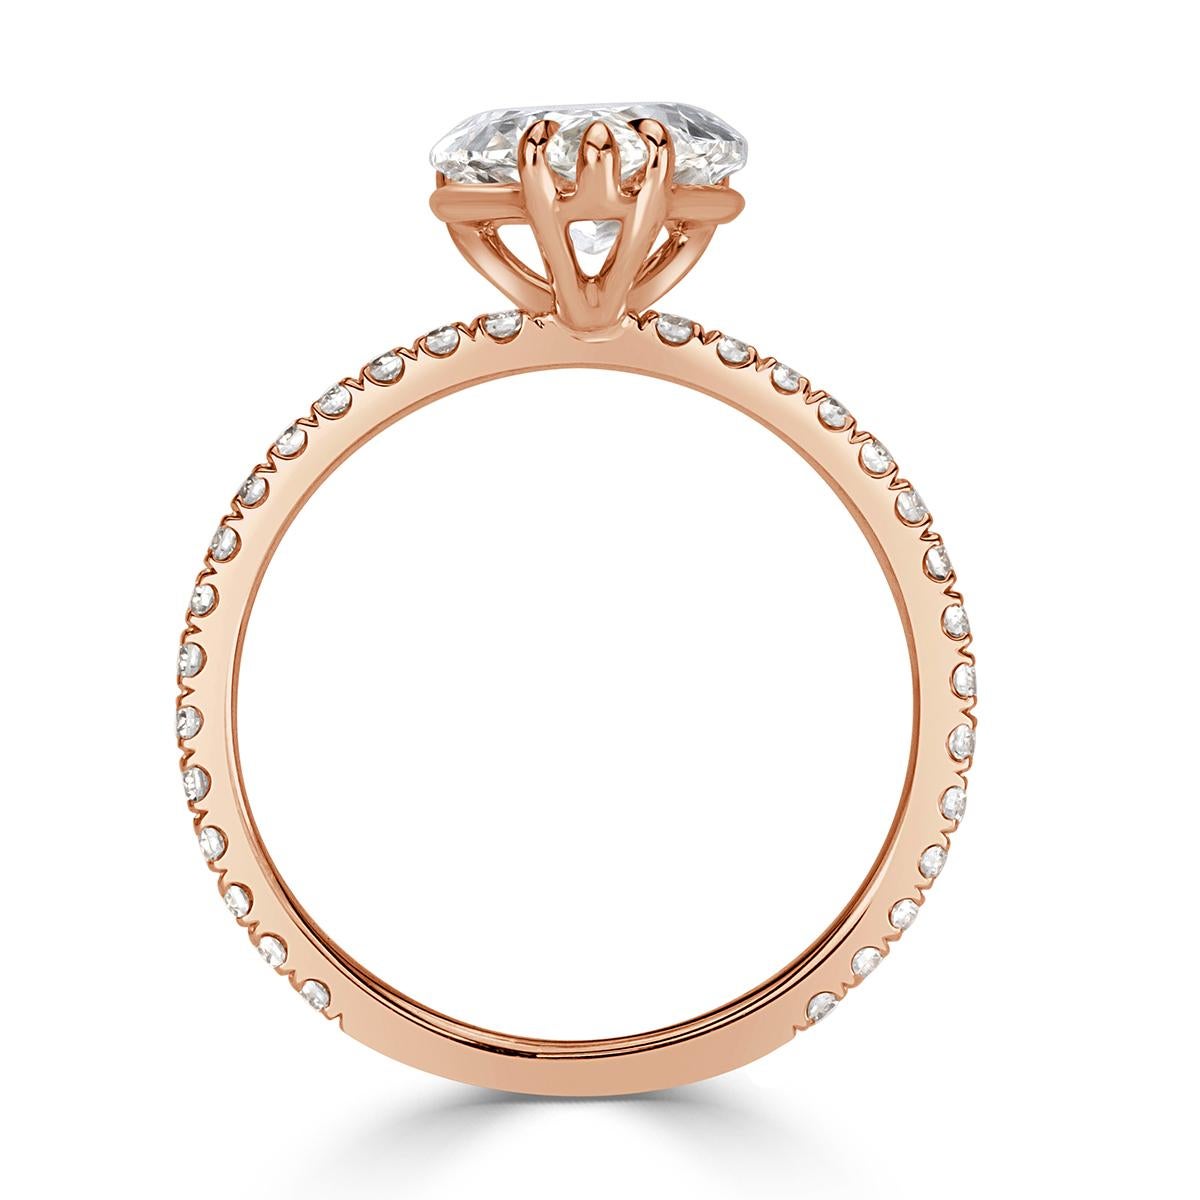 Women's or Men's Mark Broumand 2.38 Carat Pear Shaped Diamond Engagement Ring